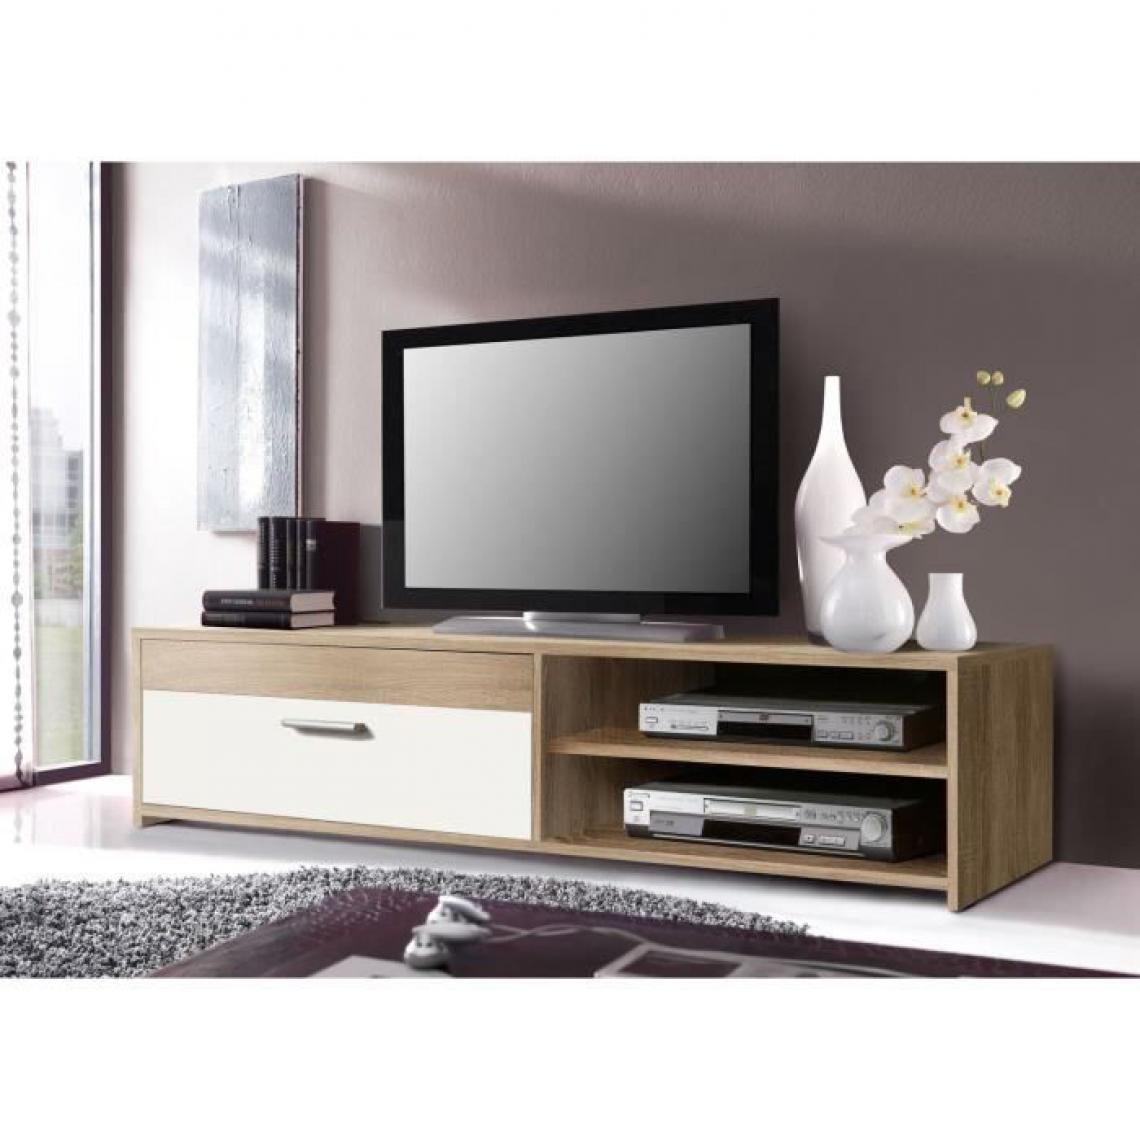 Cstore - CSTORE - pilvi meuble tv - chêne et blanc - l 120 cm - Meubles TV, Hi-Fi